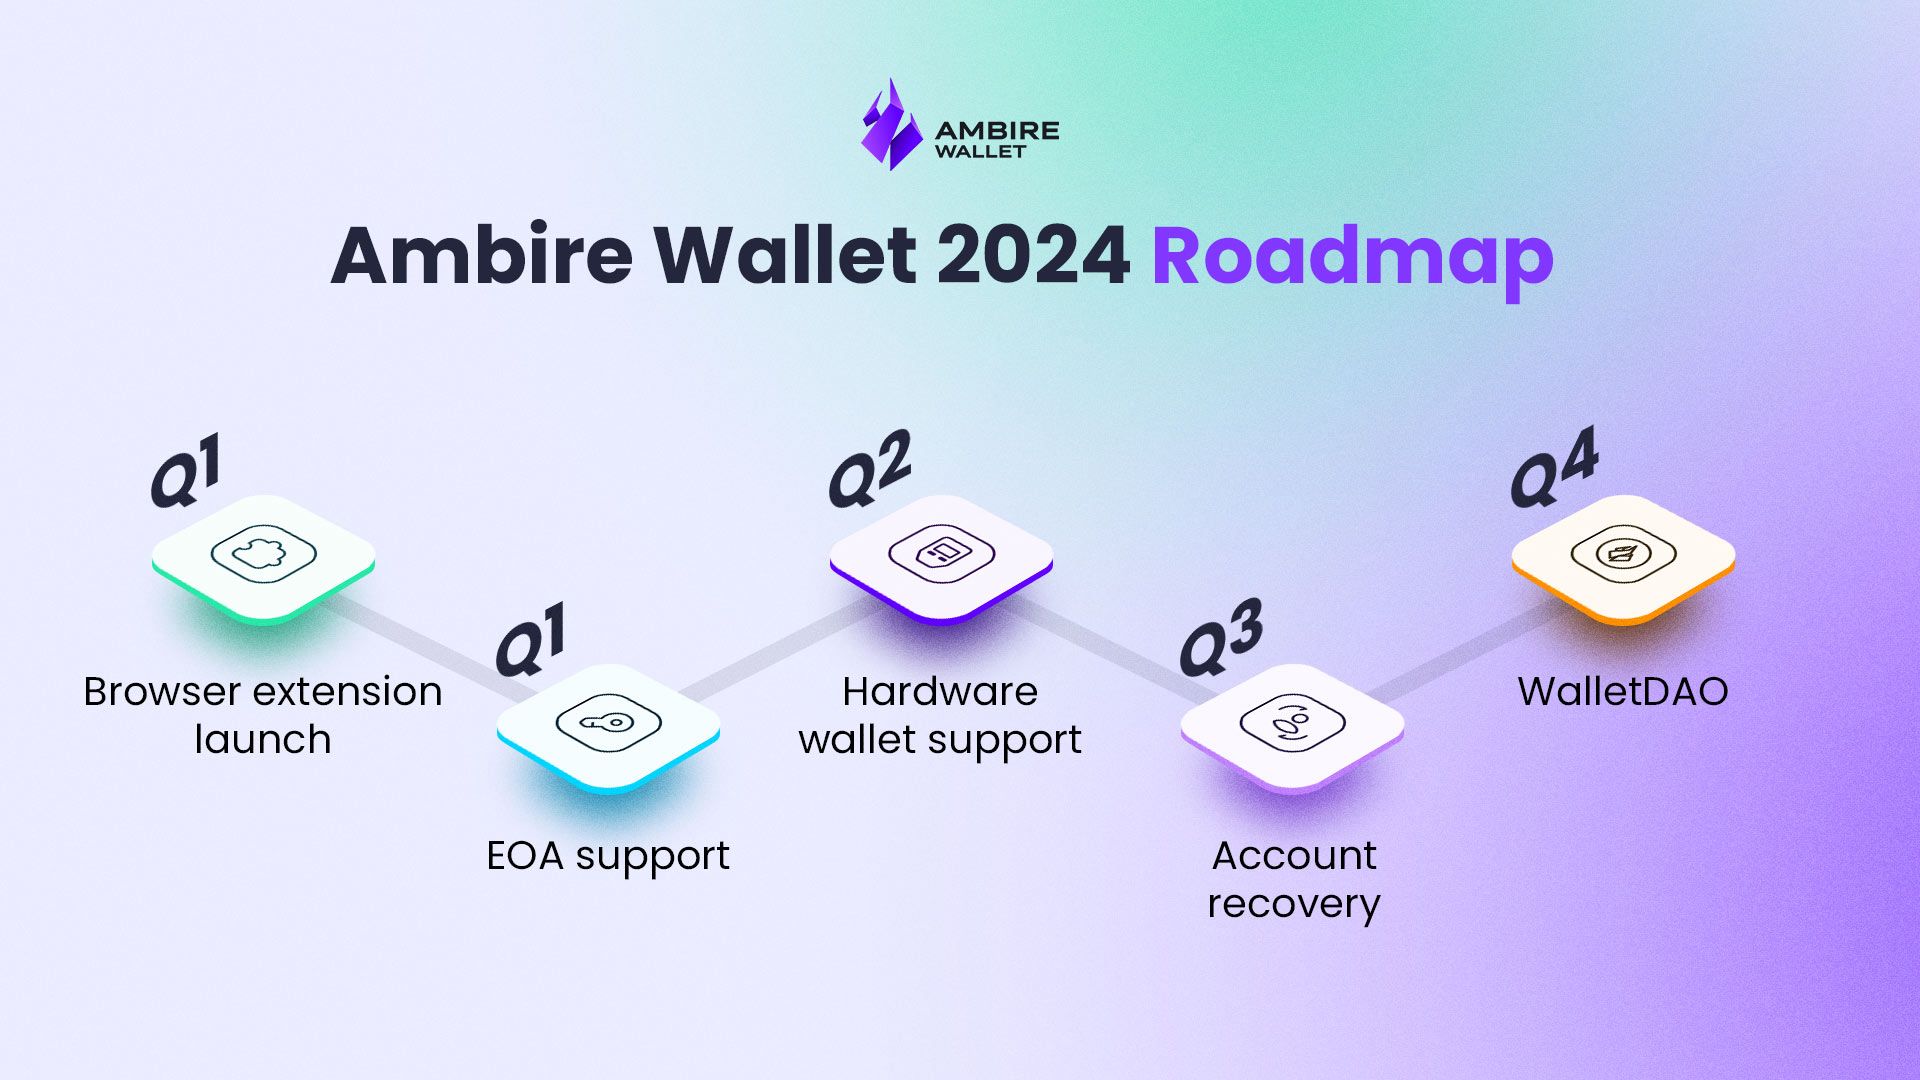 The Ambire Wallet 2024 Roadmap